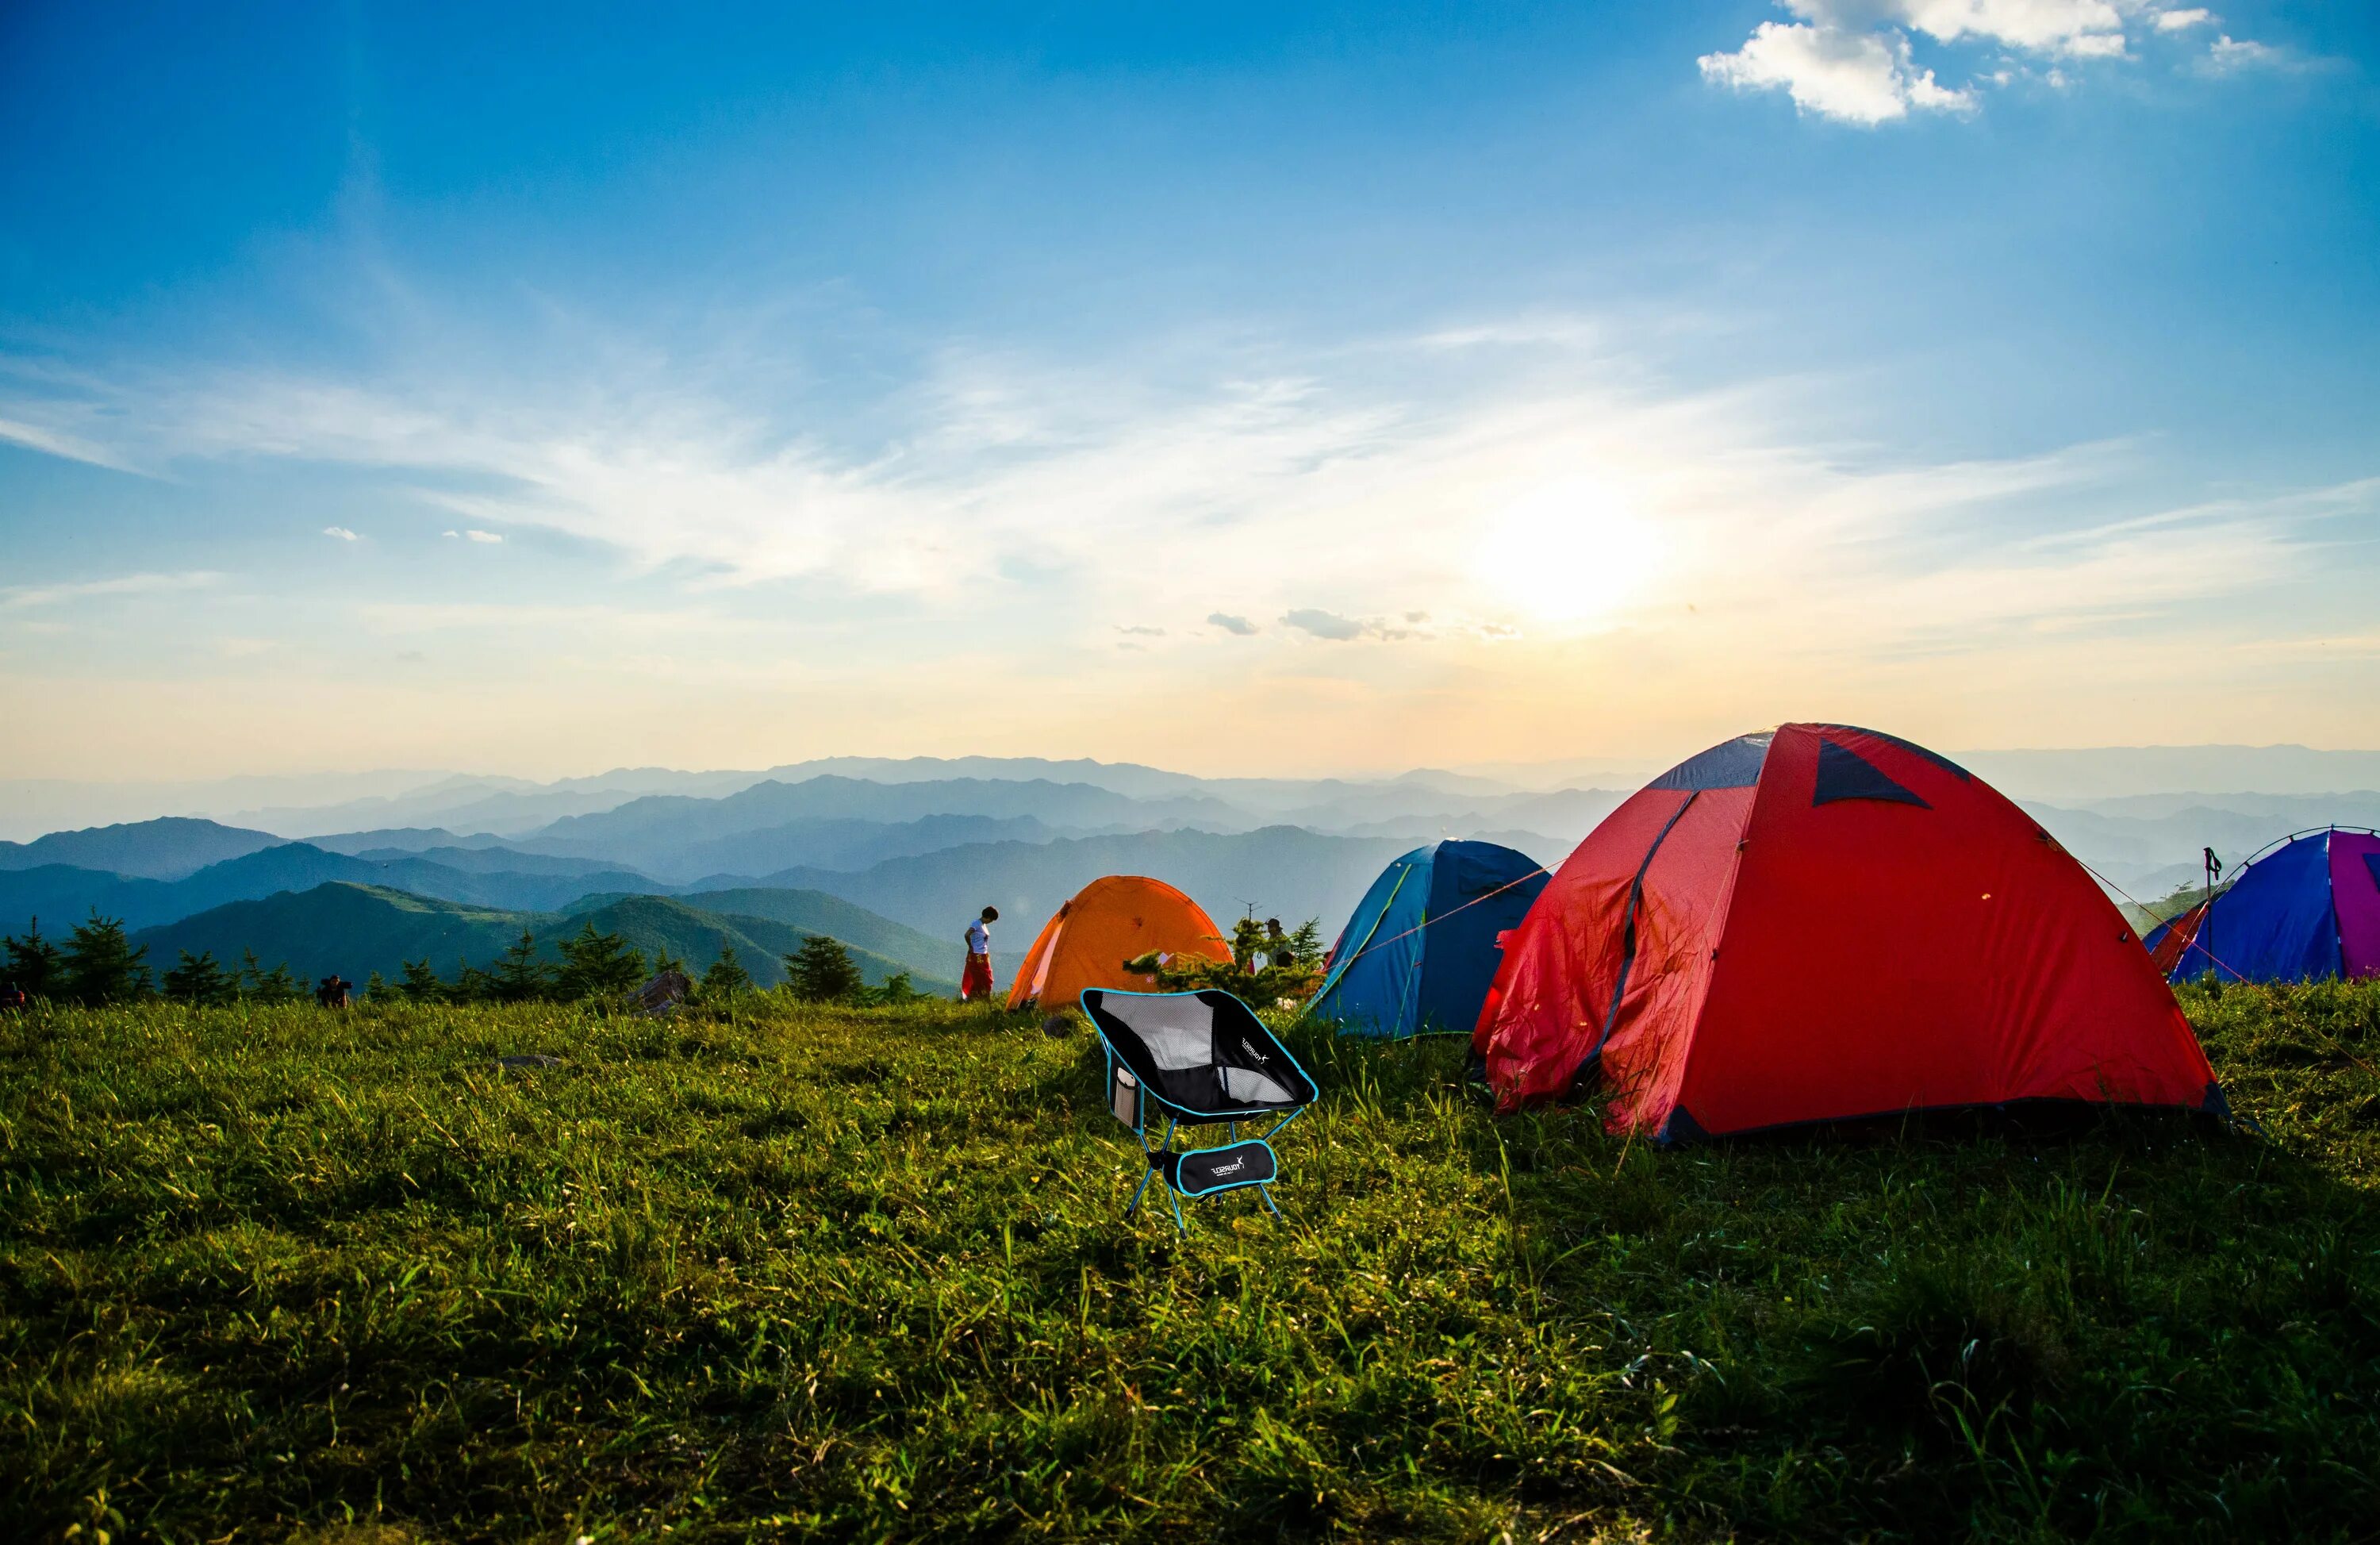 Camping outdoor. Палатка Camping Tent. Палатка на Поляне. Палатка в горах. Туризм с палатками.